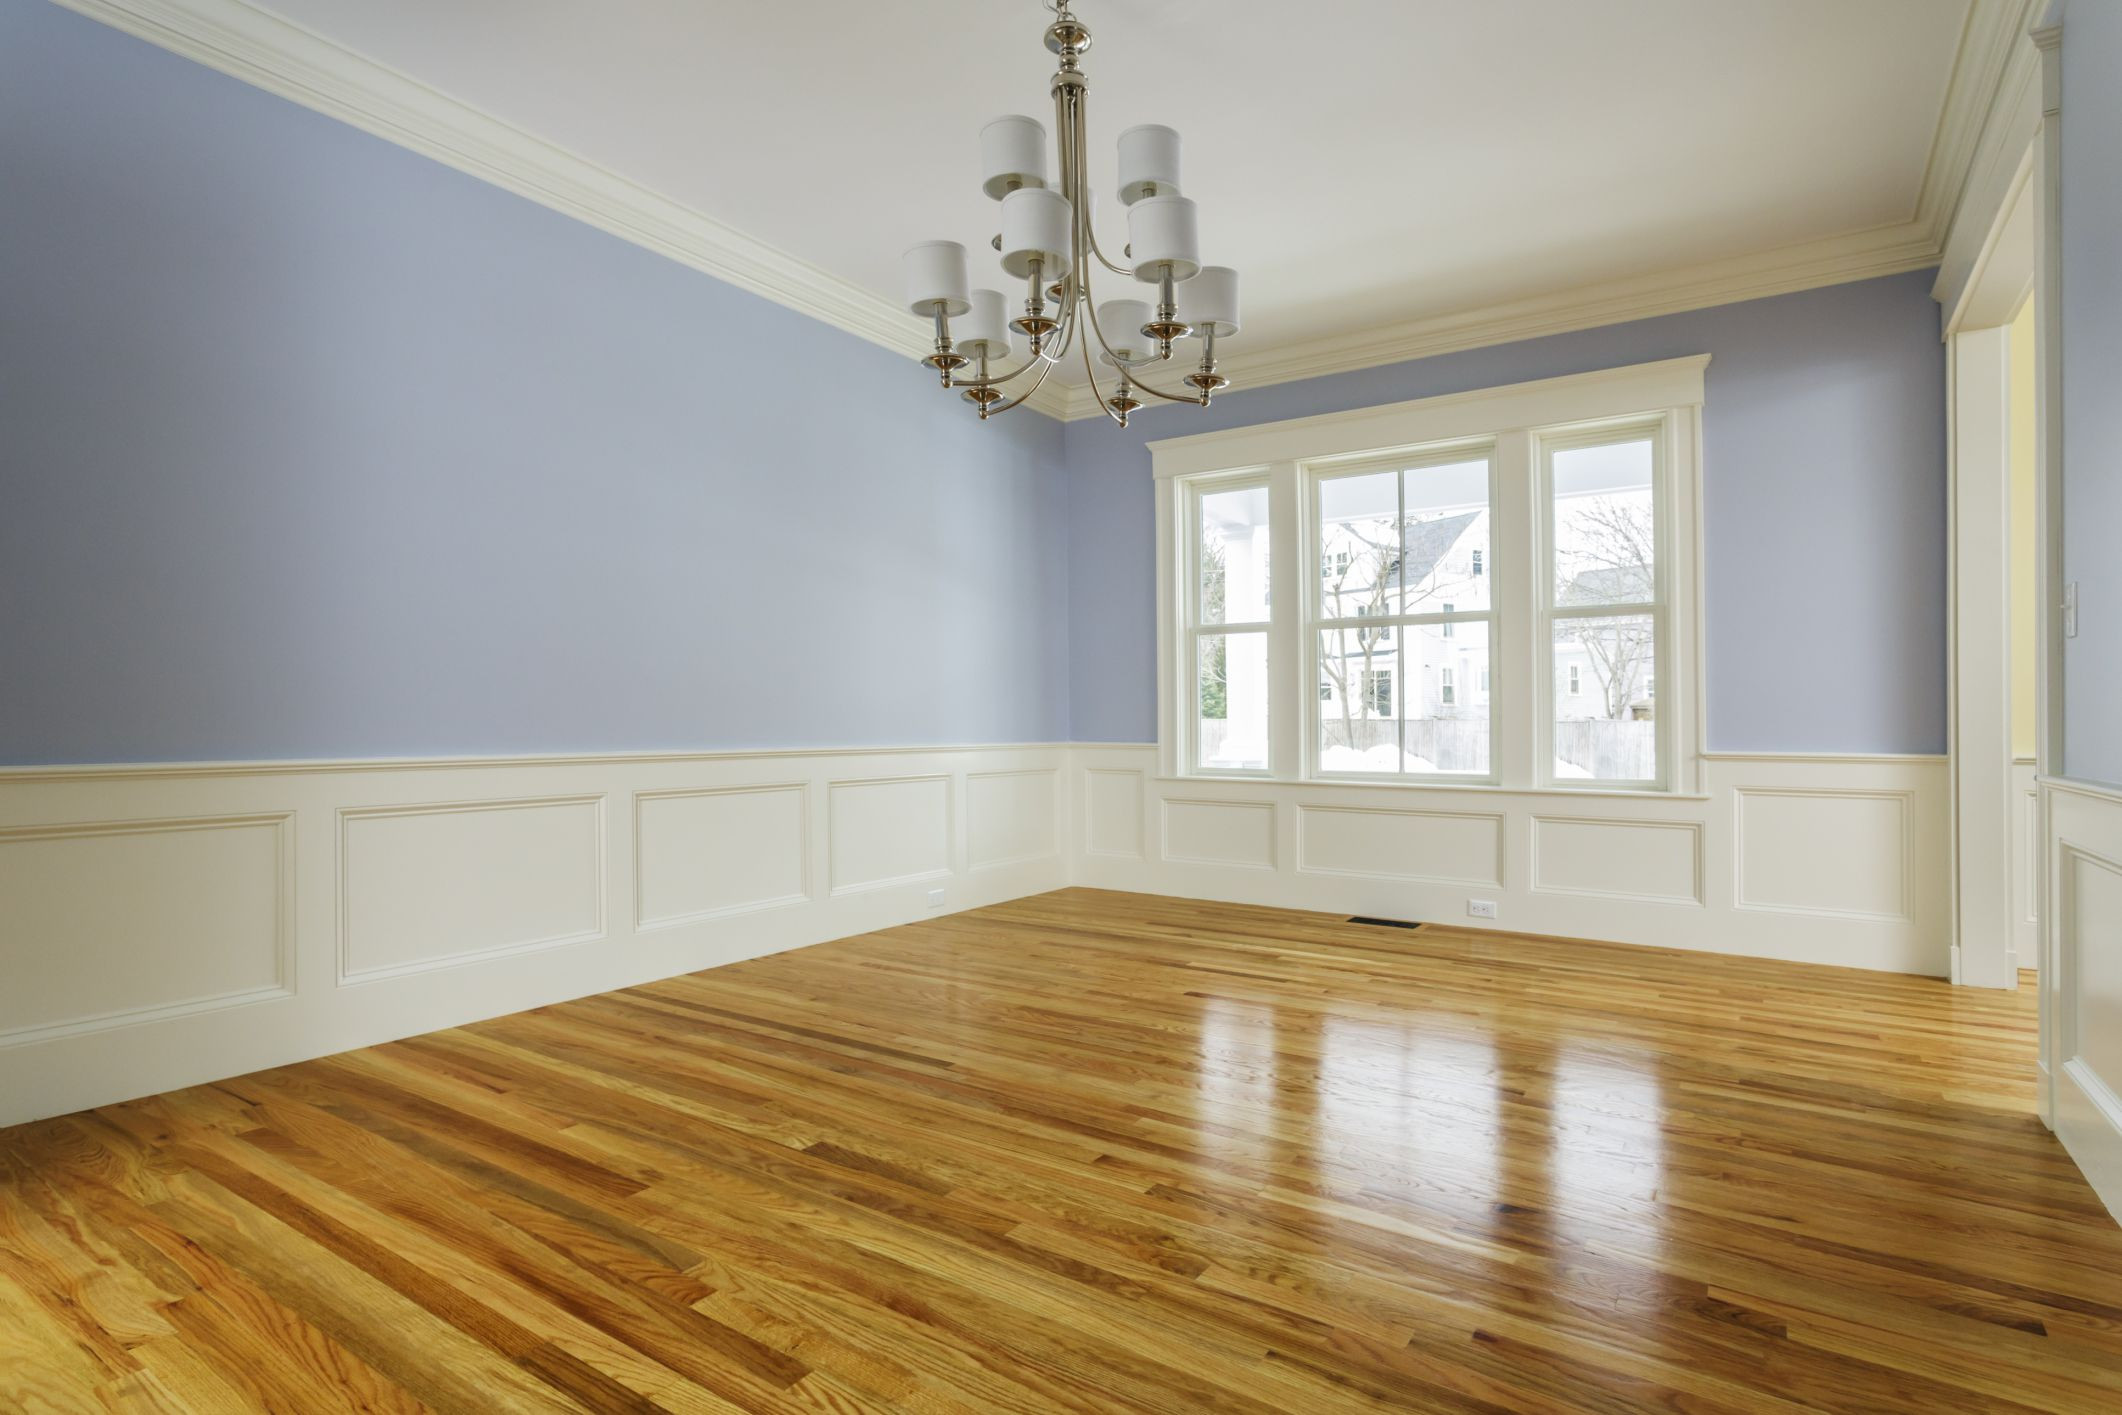 29 Unique Hardwood Floor Colors 2018 2024 free download hardwood floor colors 2018 of the cost to refinish hardwood floors with regard to 168686572 highres 56a2fd773df78cf7727b6cb3